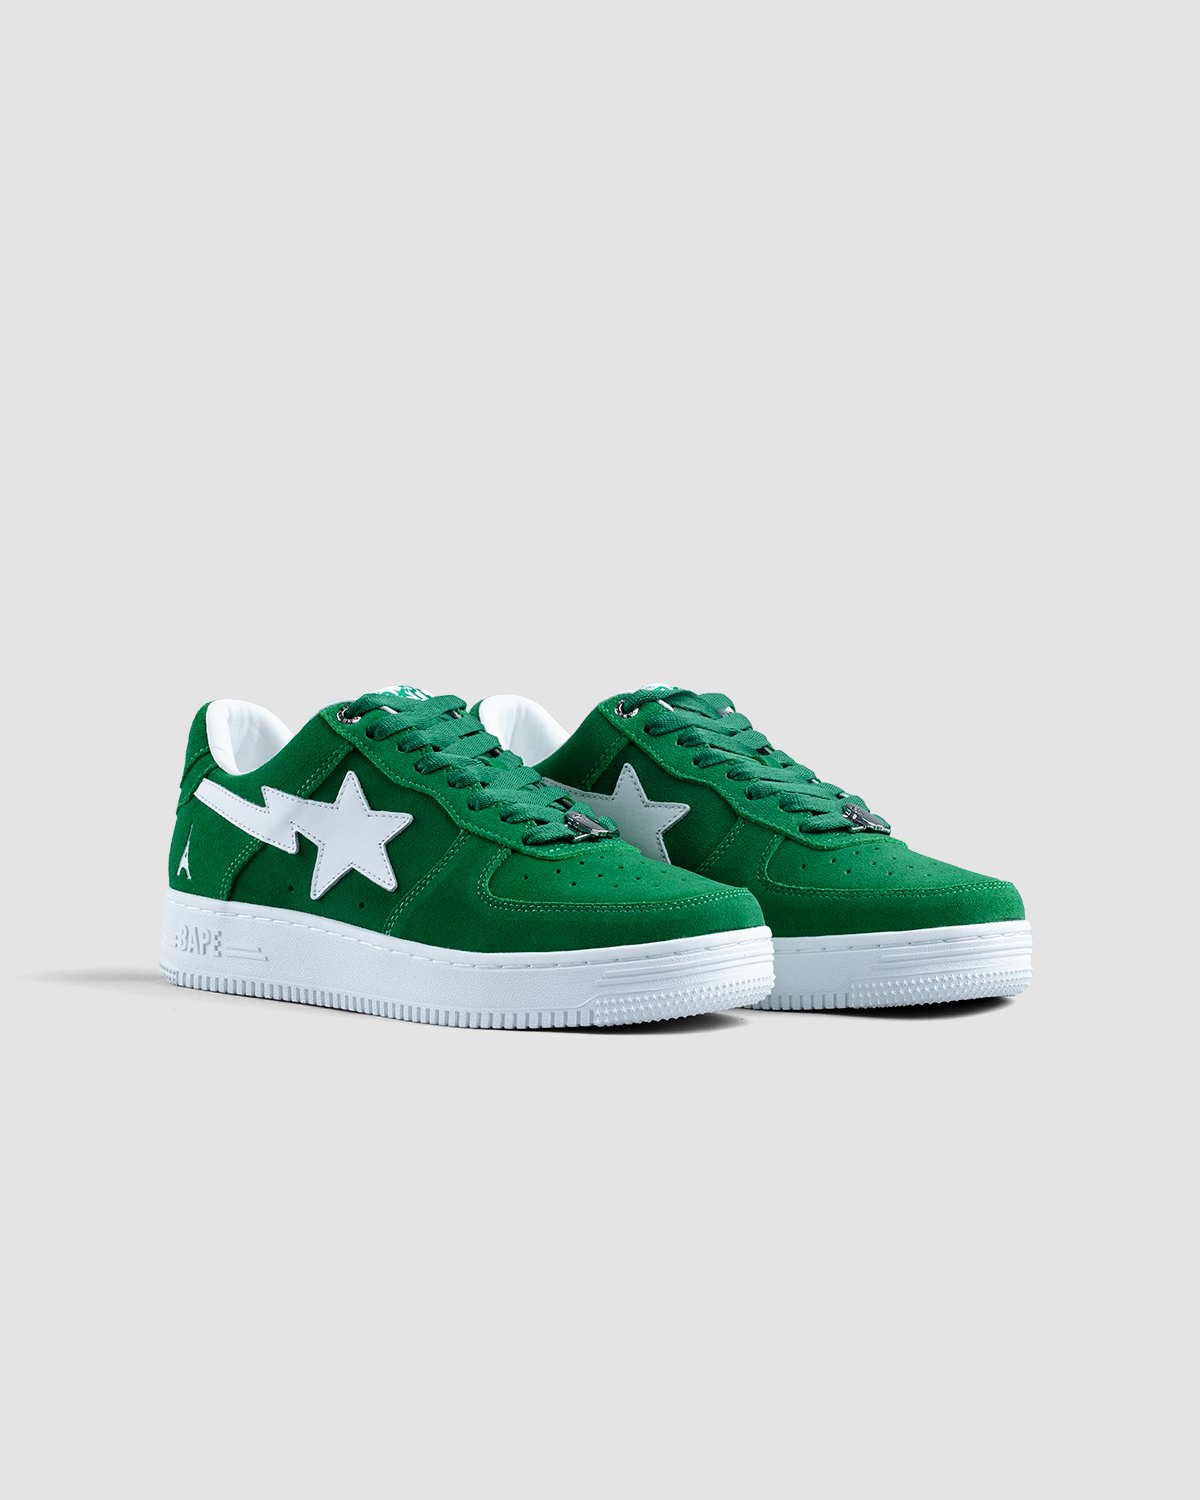 BAPE x Highsnobiety - BAPE STA Green - Footwear - Green - Image 2